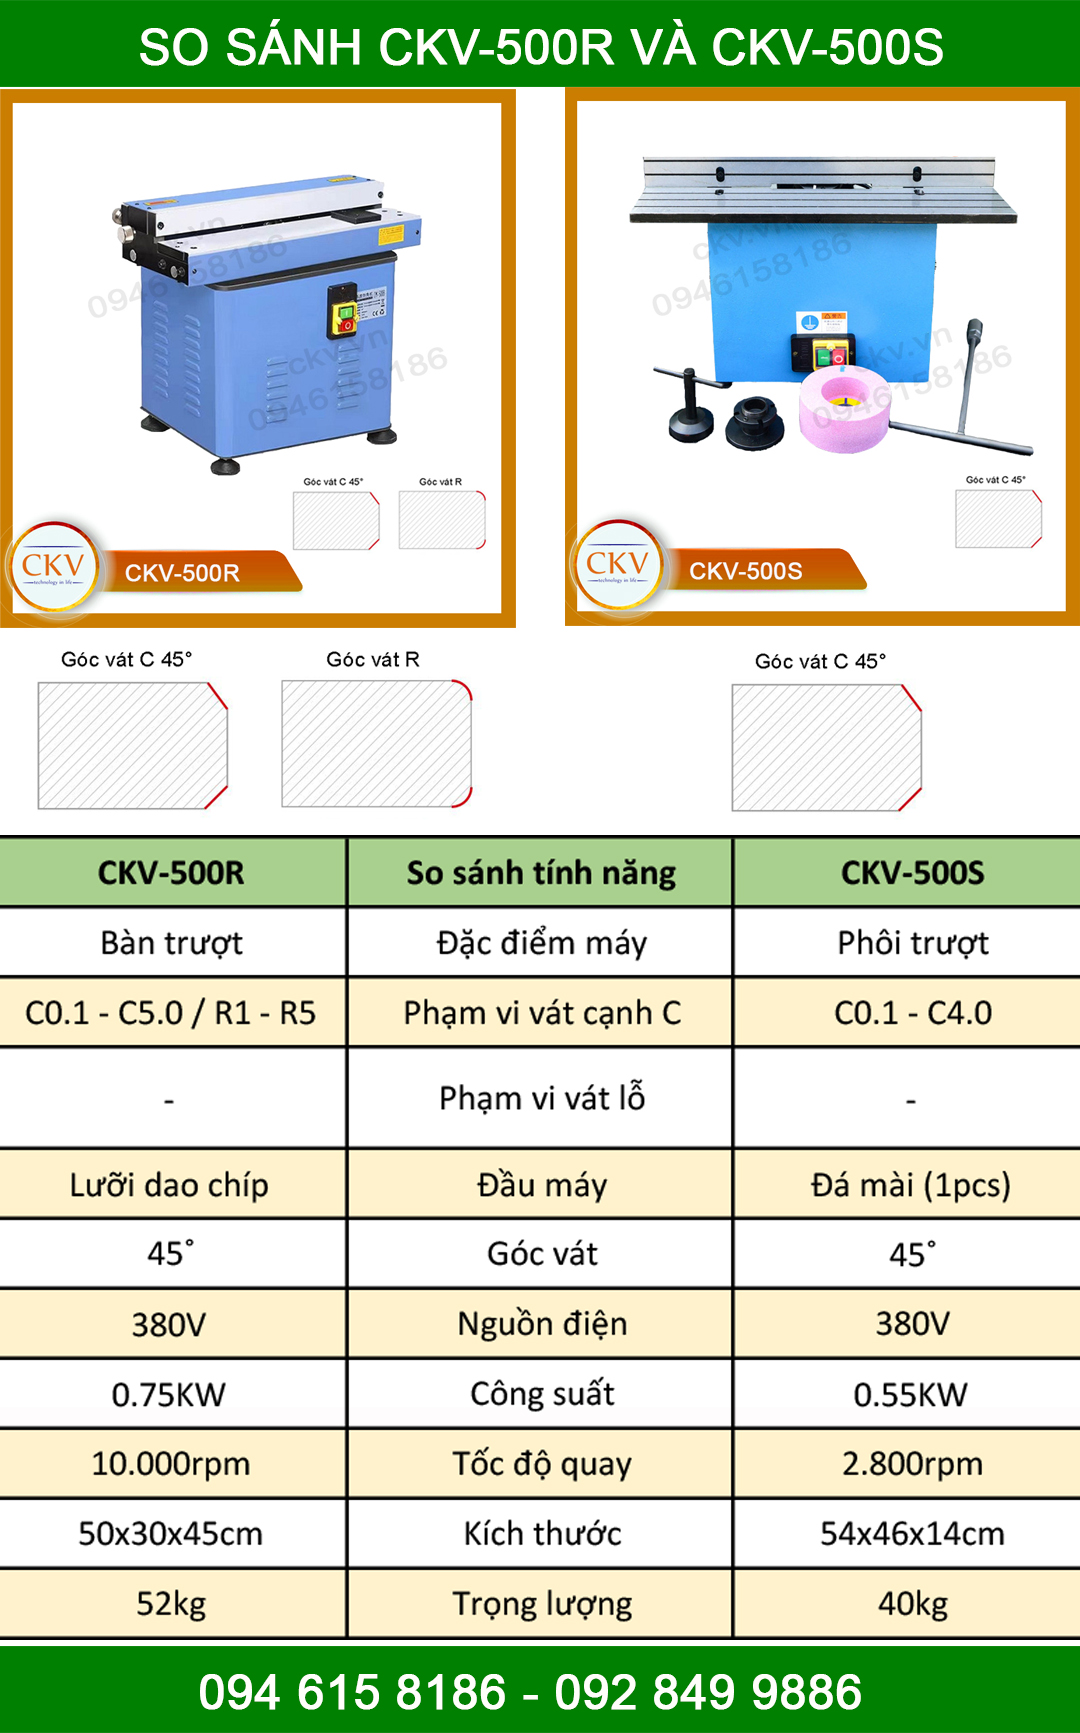 So sánh CKV-500R với CKV-500S